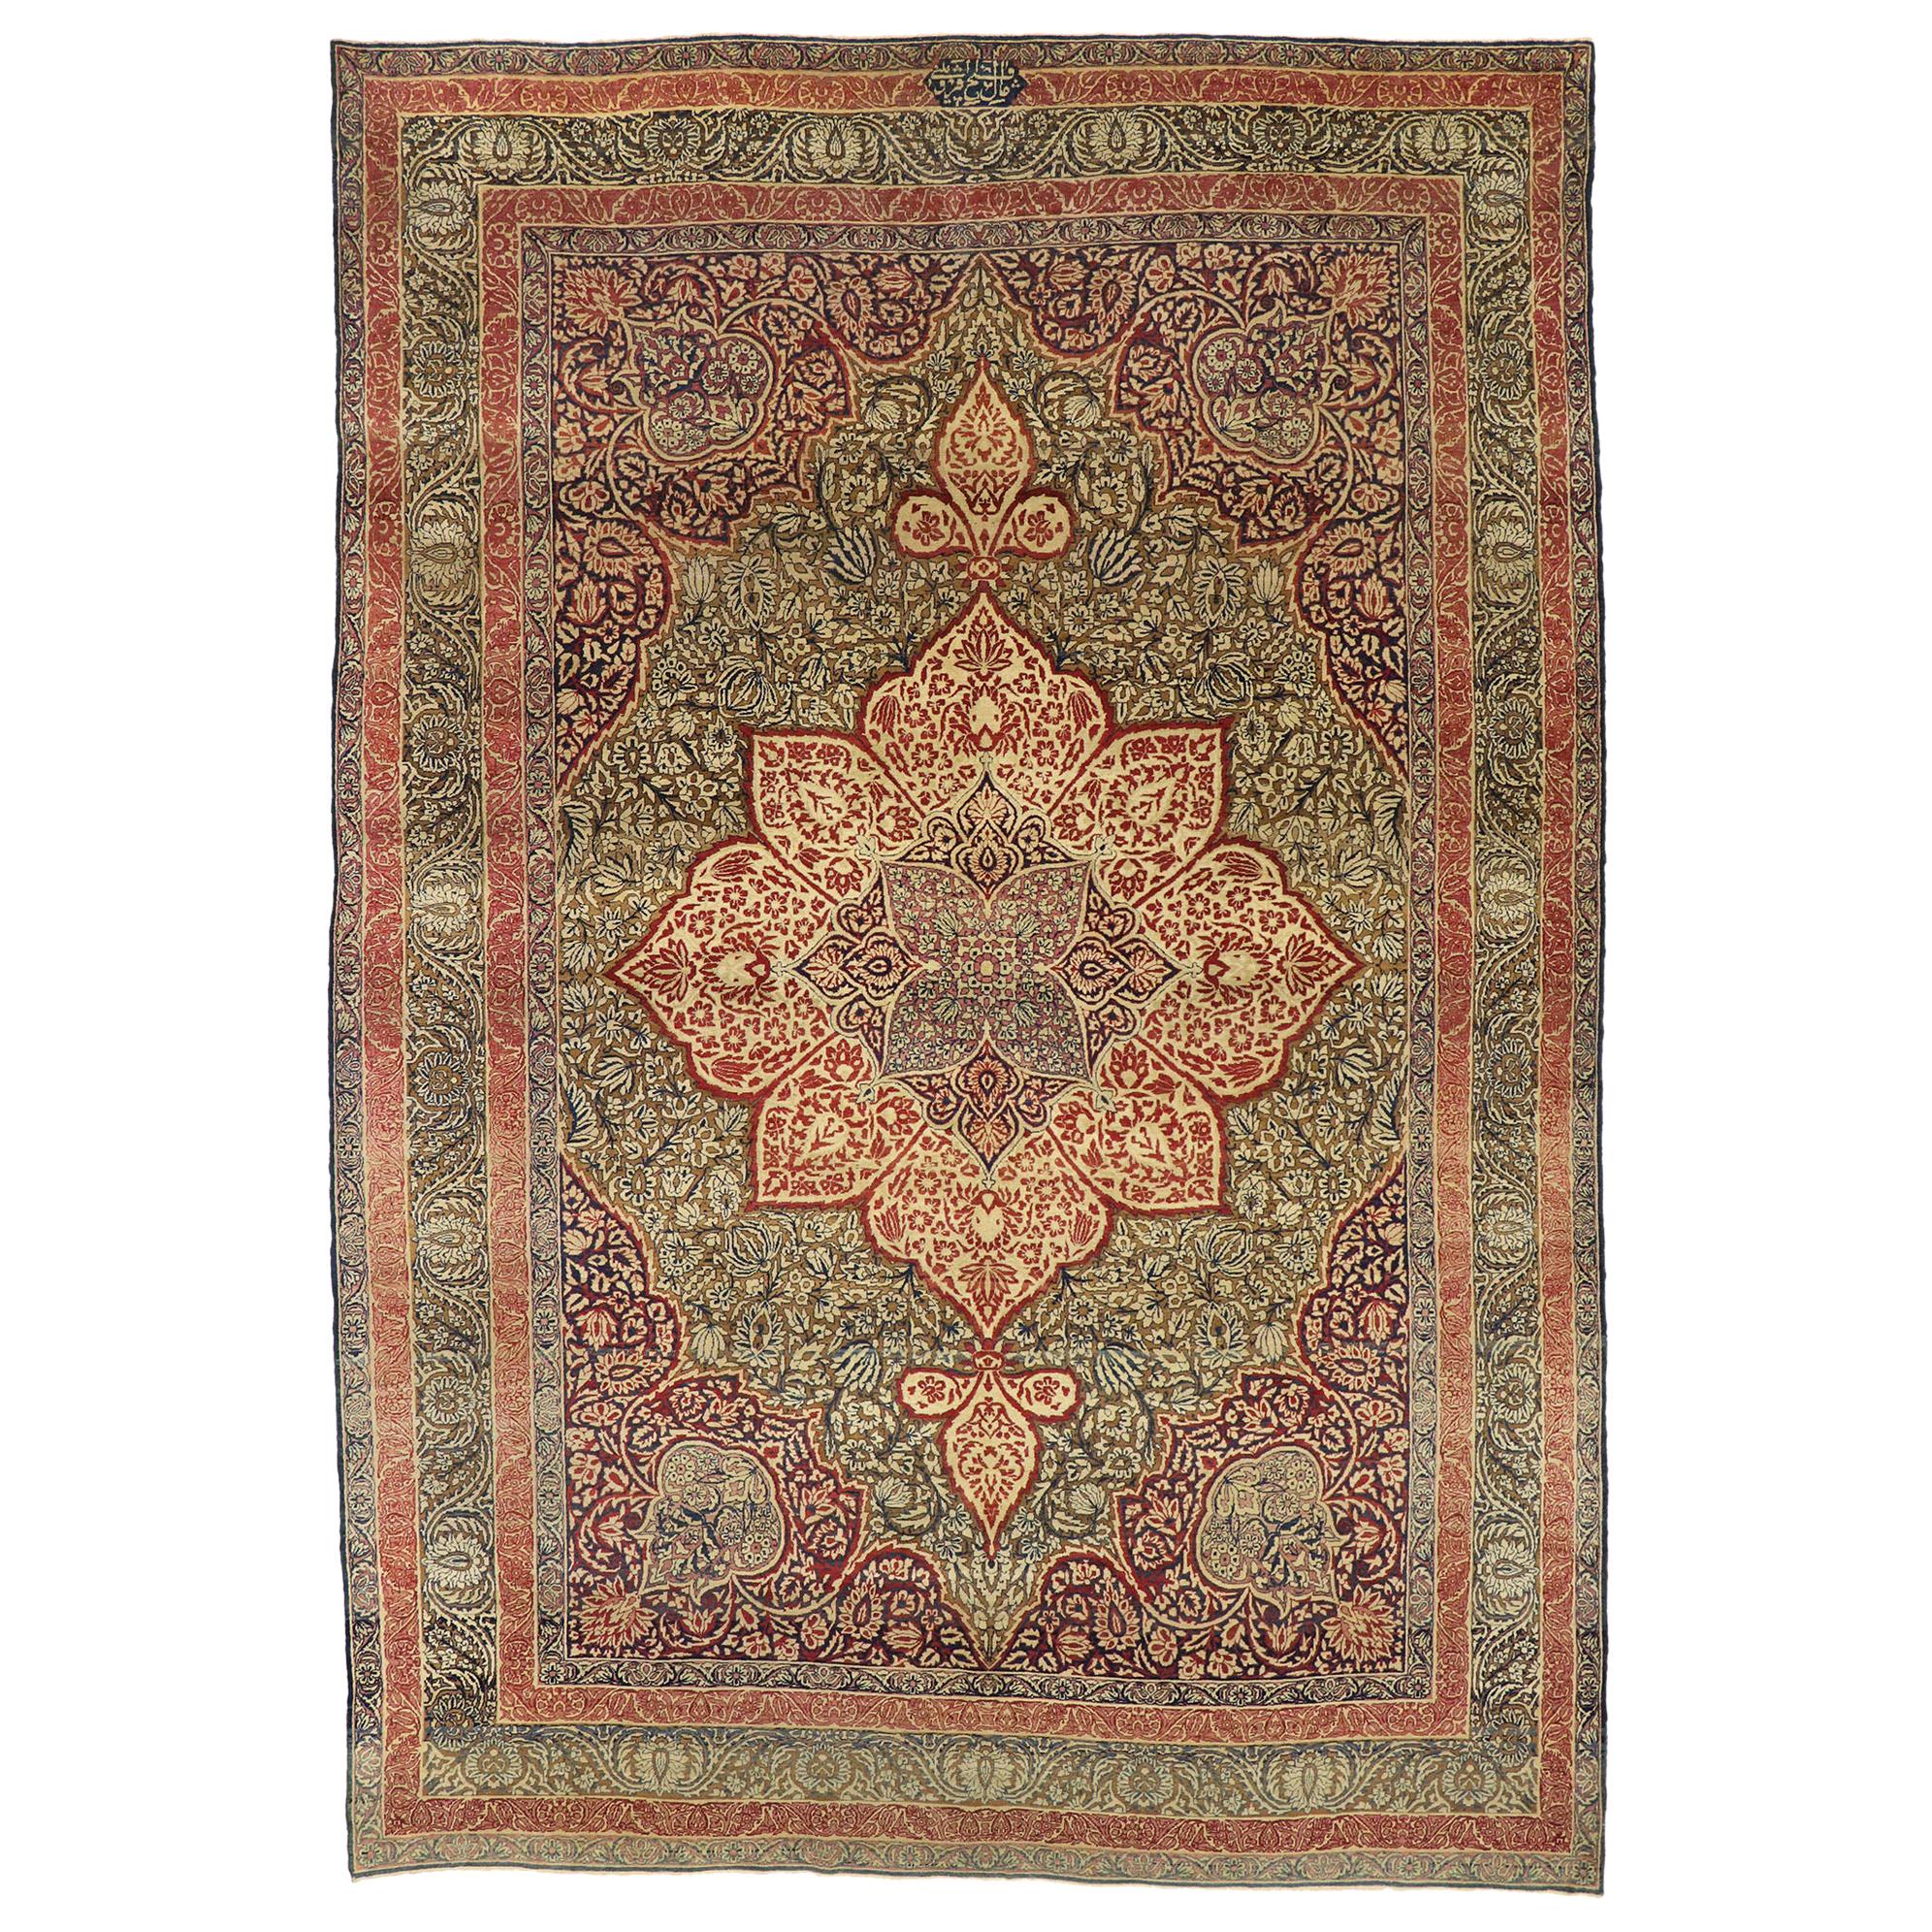 Antique Persian Kermanshah Rug with William Morris Arts & Crafts Style